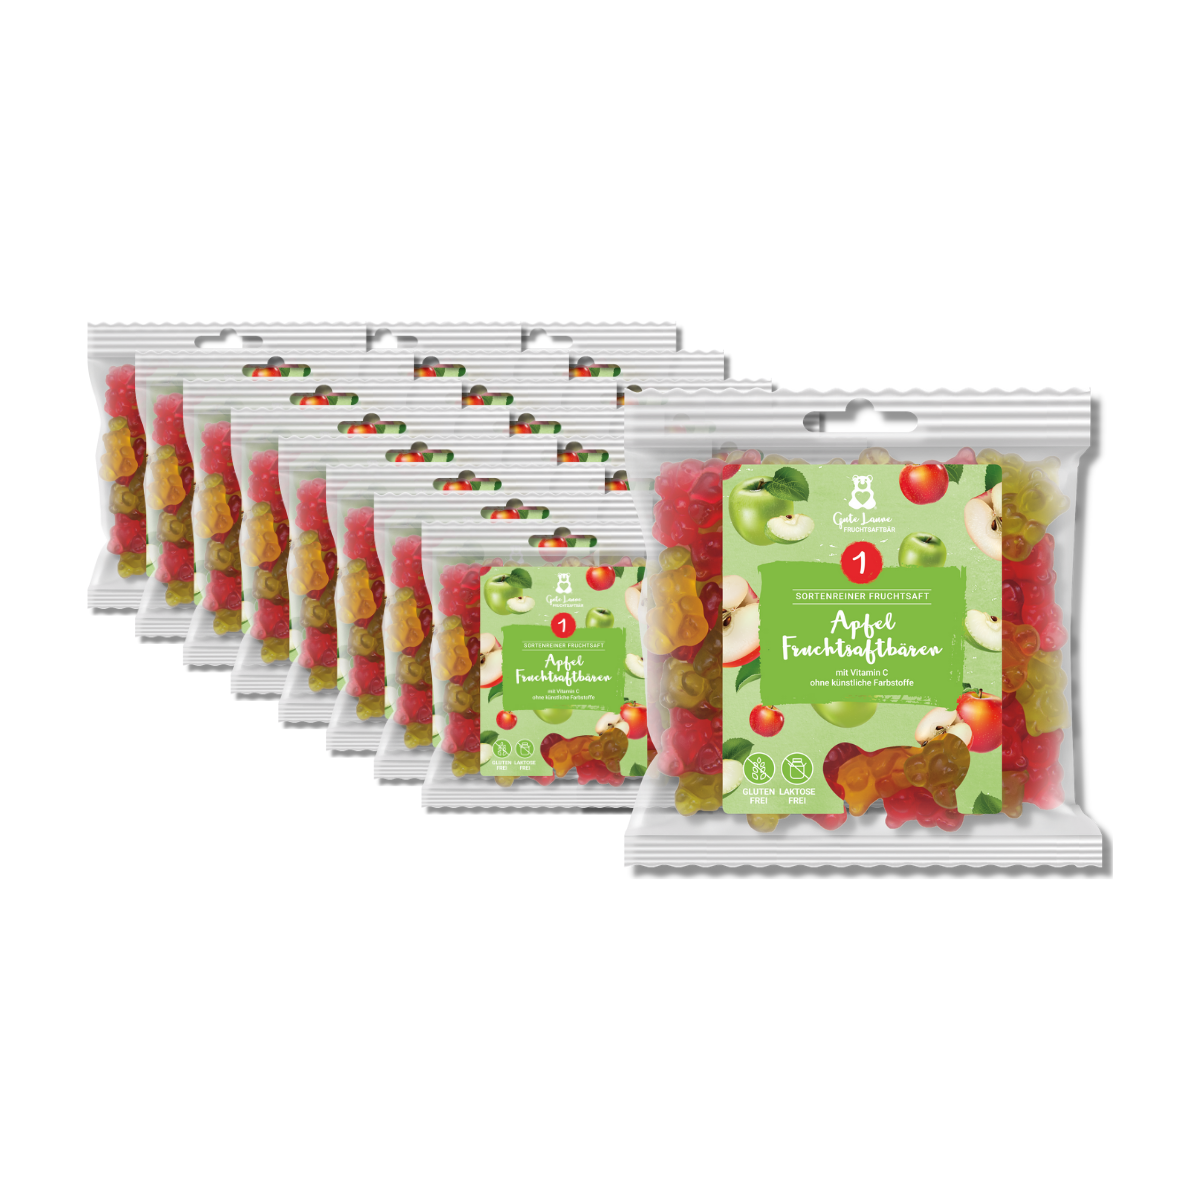 Fruchtsaftbären Apfel - Großverpackung (VE mit 23 x 150g Tüten)